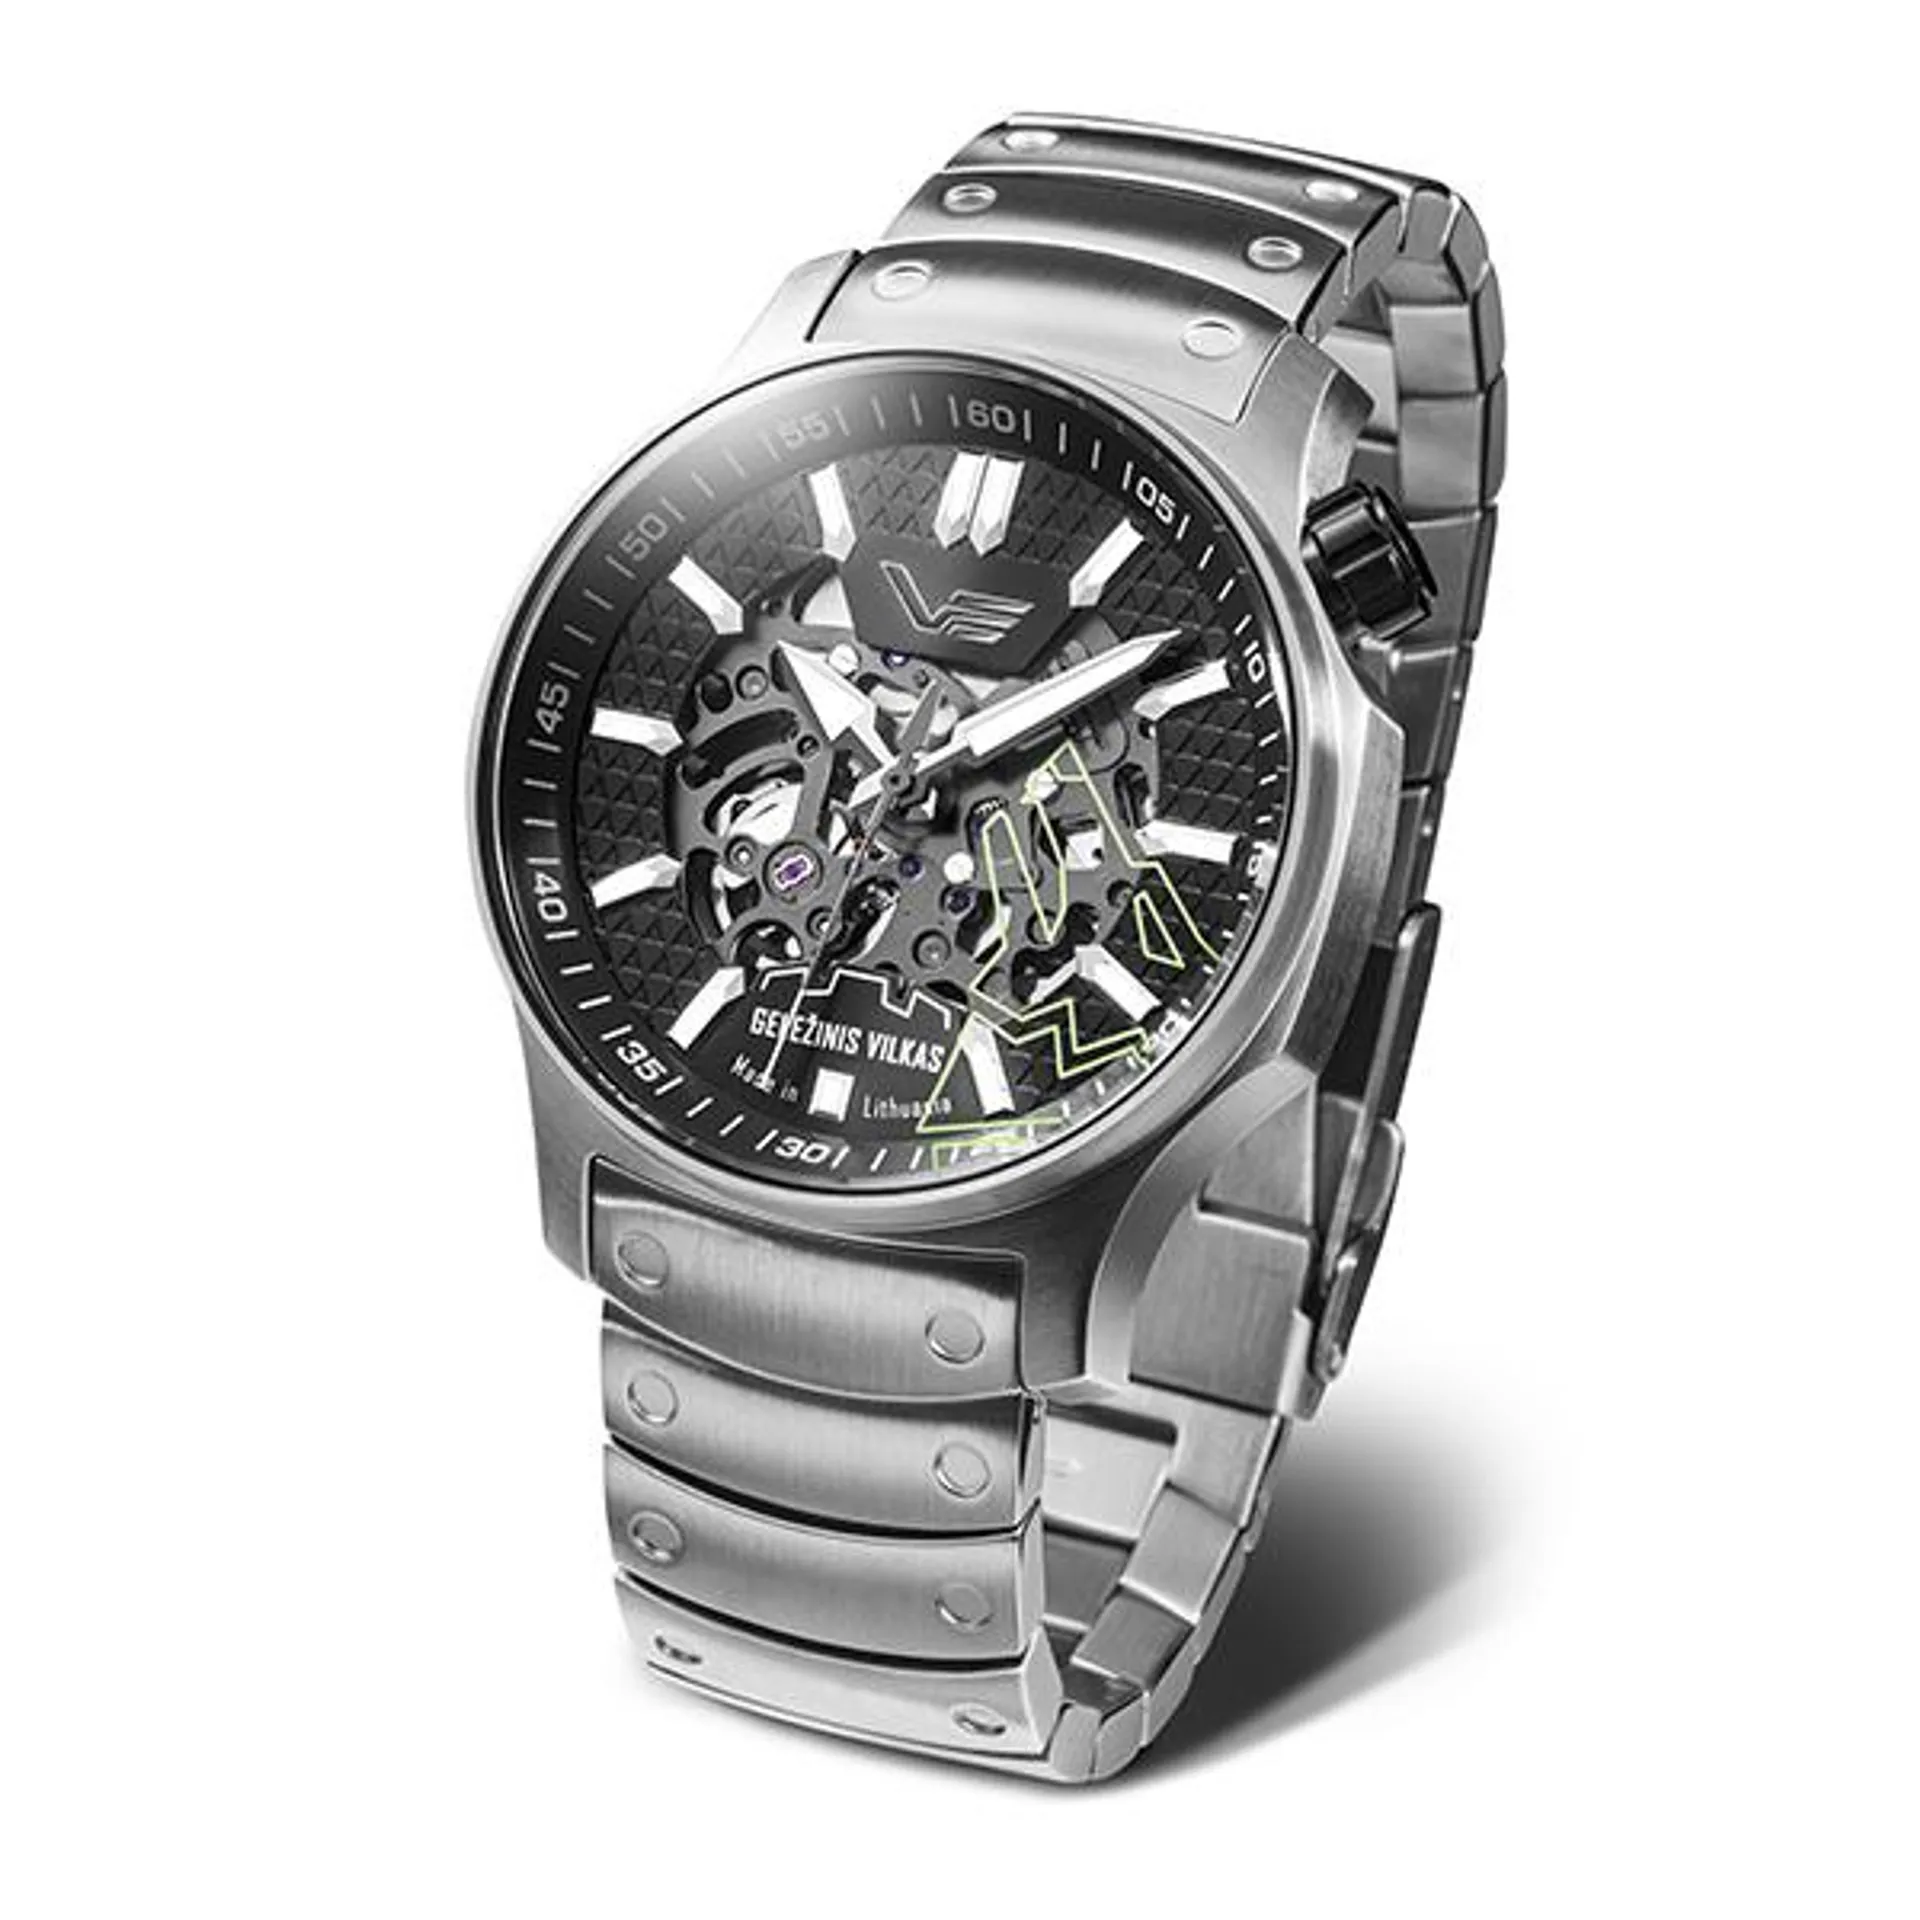 Vostok Europe Gents Ltd Ed Gelezinis Vilkas Watch with Stainless Steel Bracelet